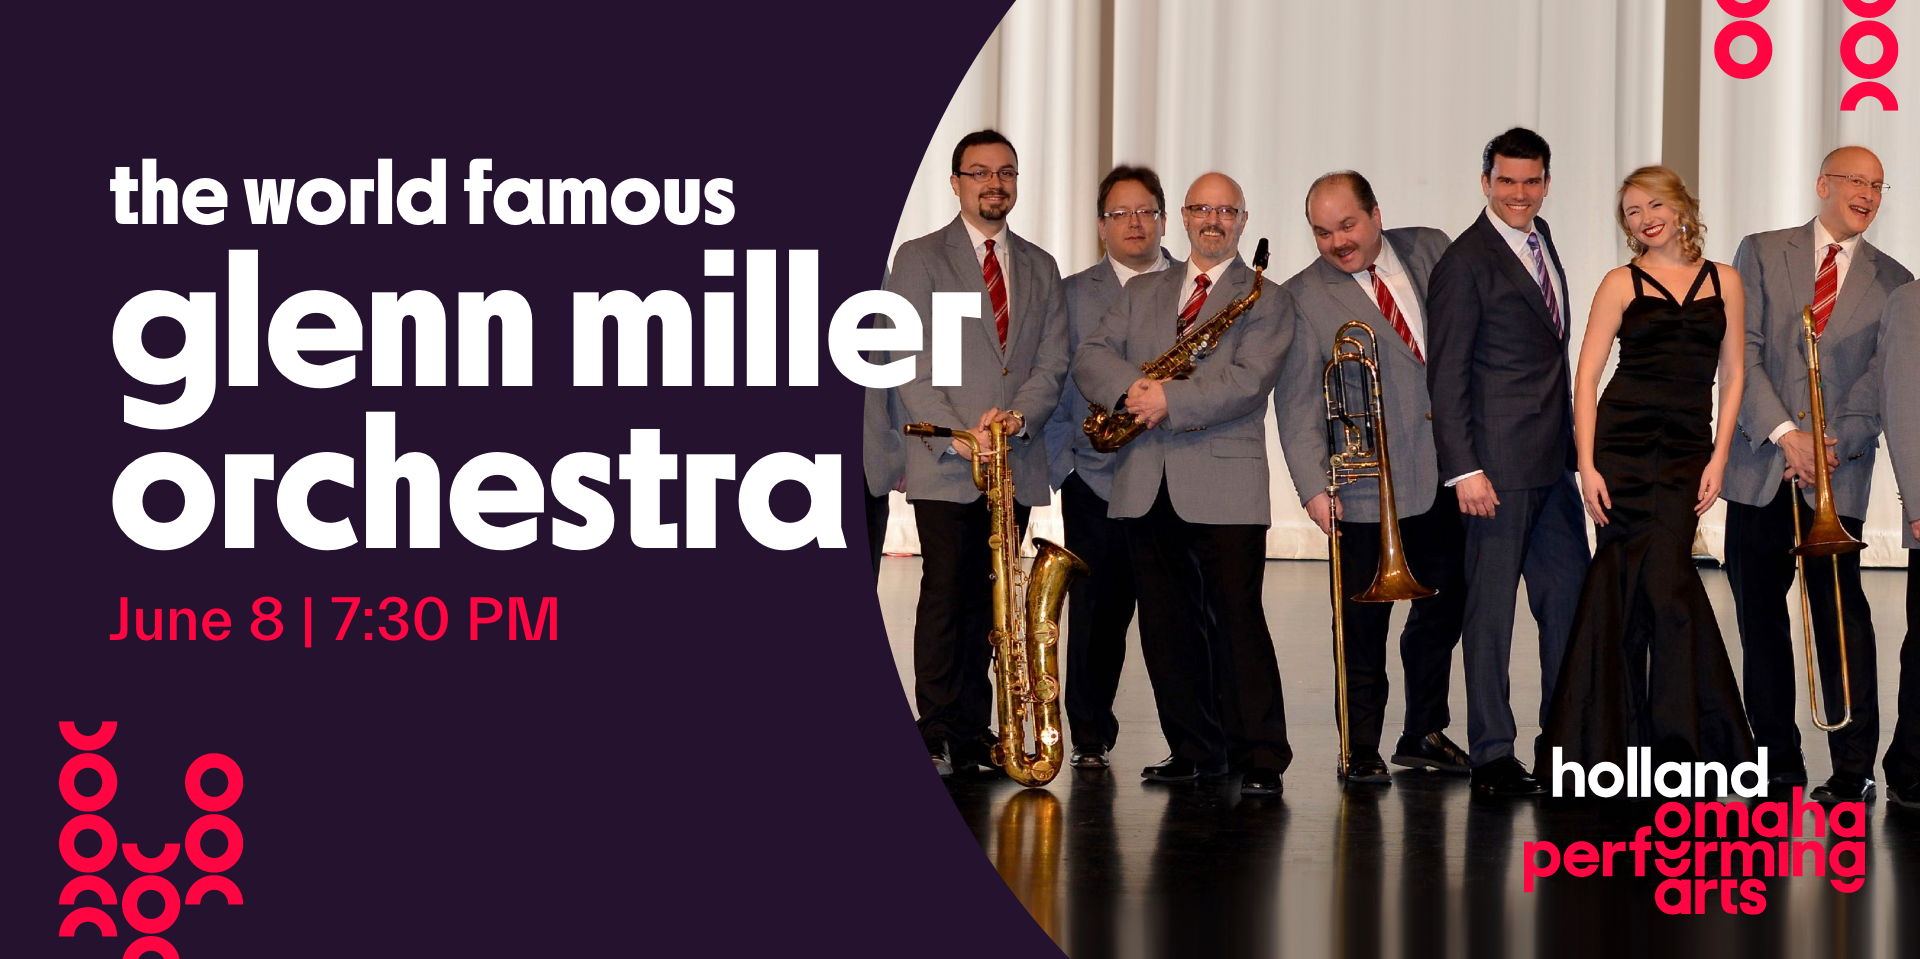 The World-Famous Glenn Miller Orchestra  promotional image